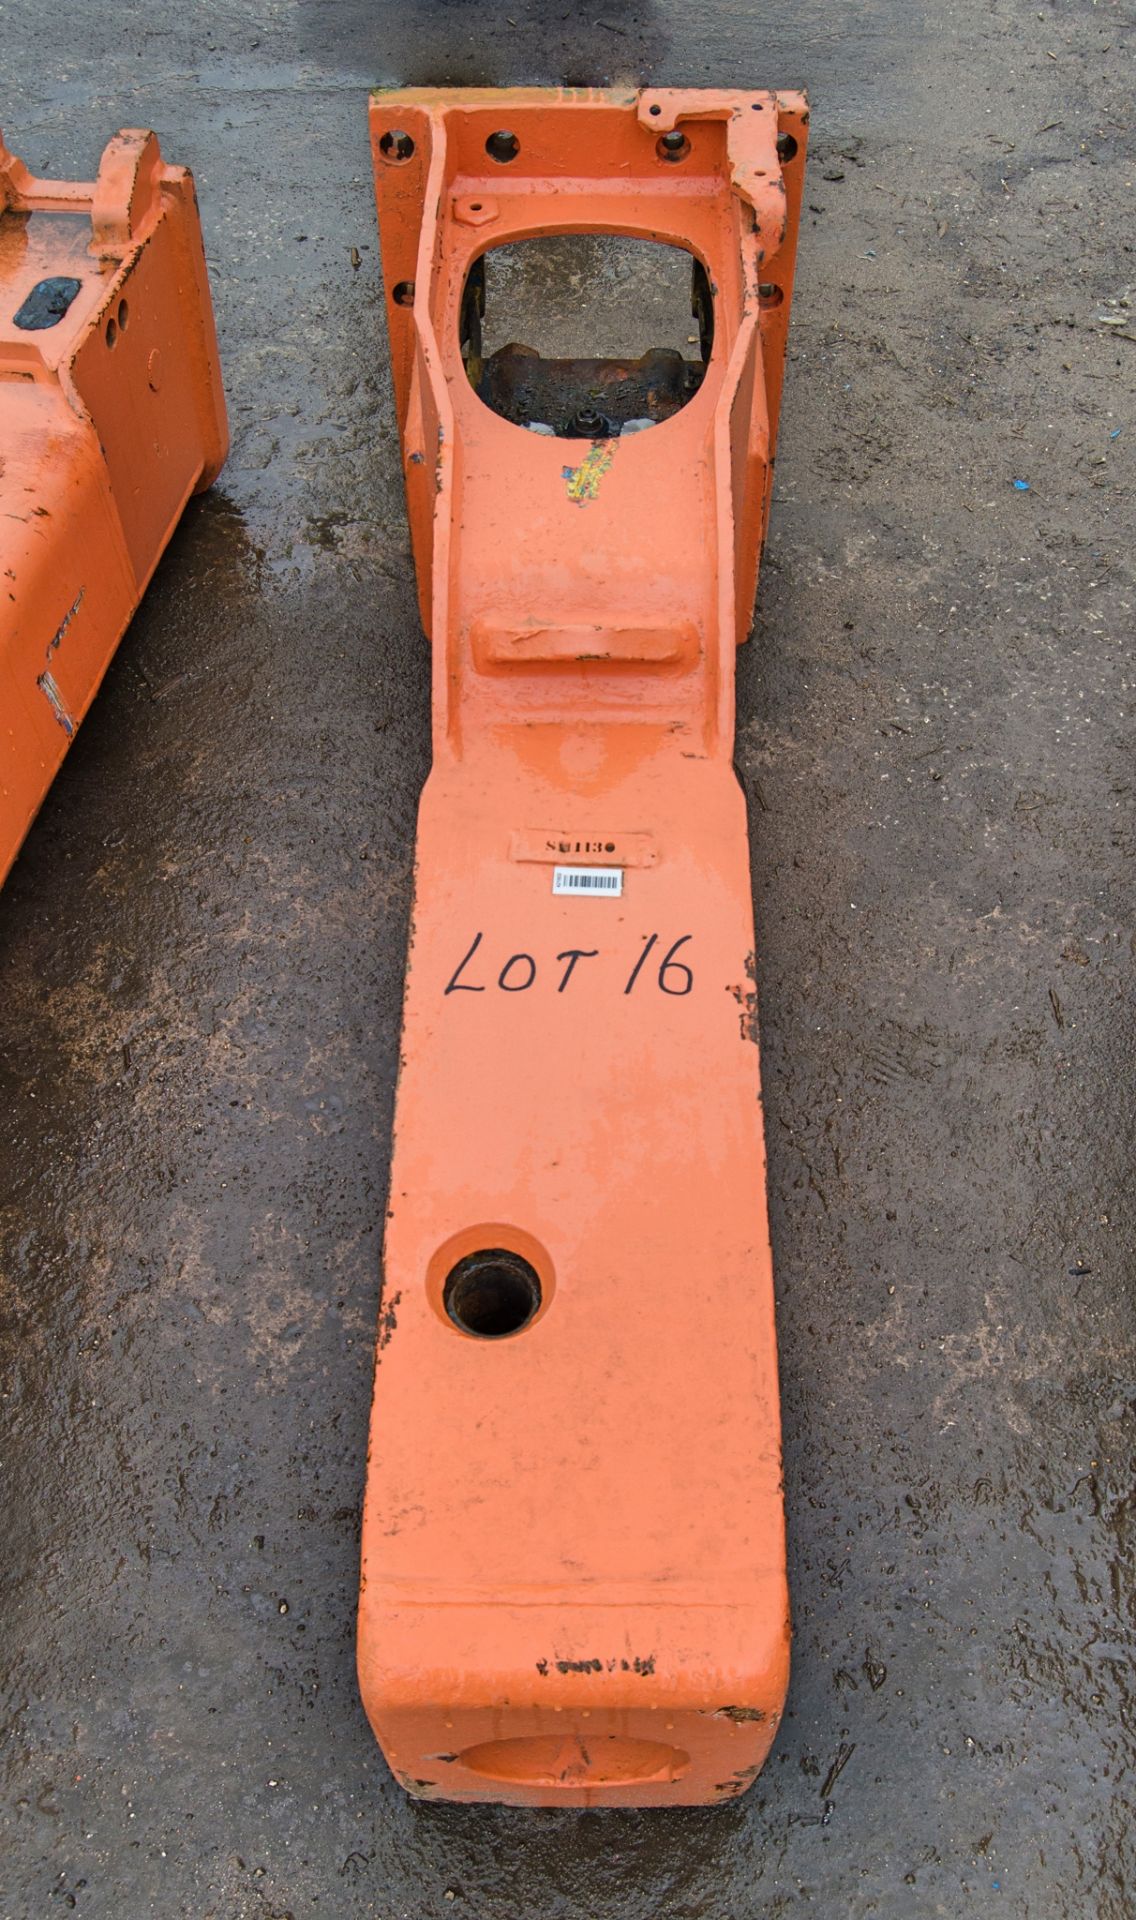 Hydraulic breaker to suit 13-18 tonne excavator SH1130 ** Incomplete and no headstock ** - Bild 3 aus 4